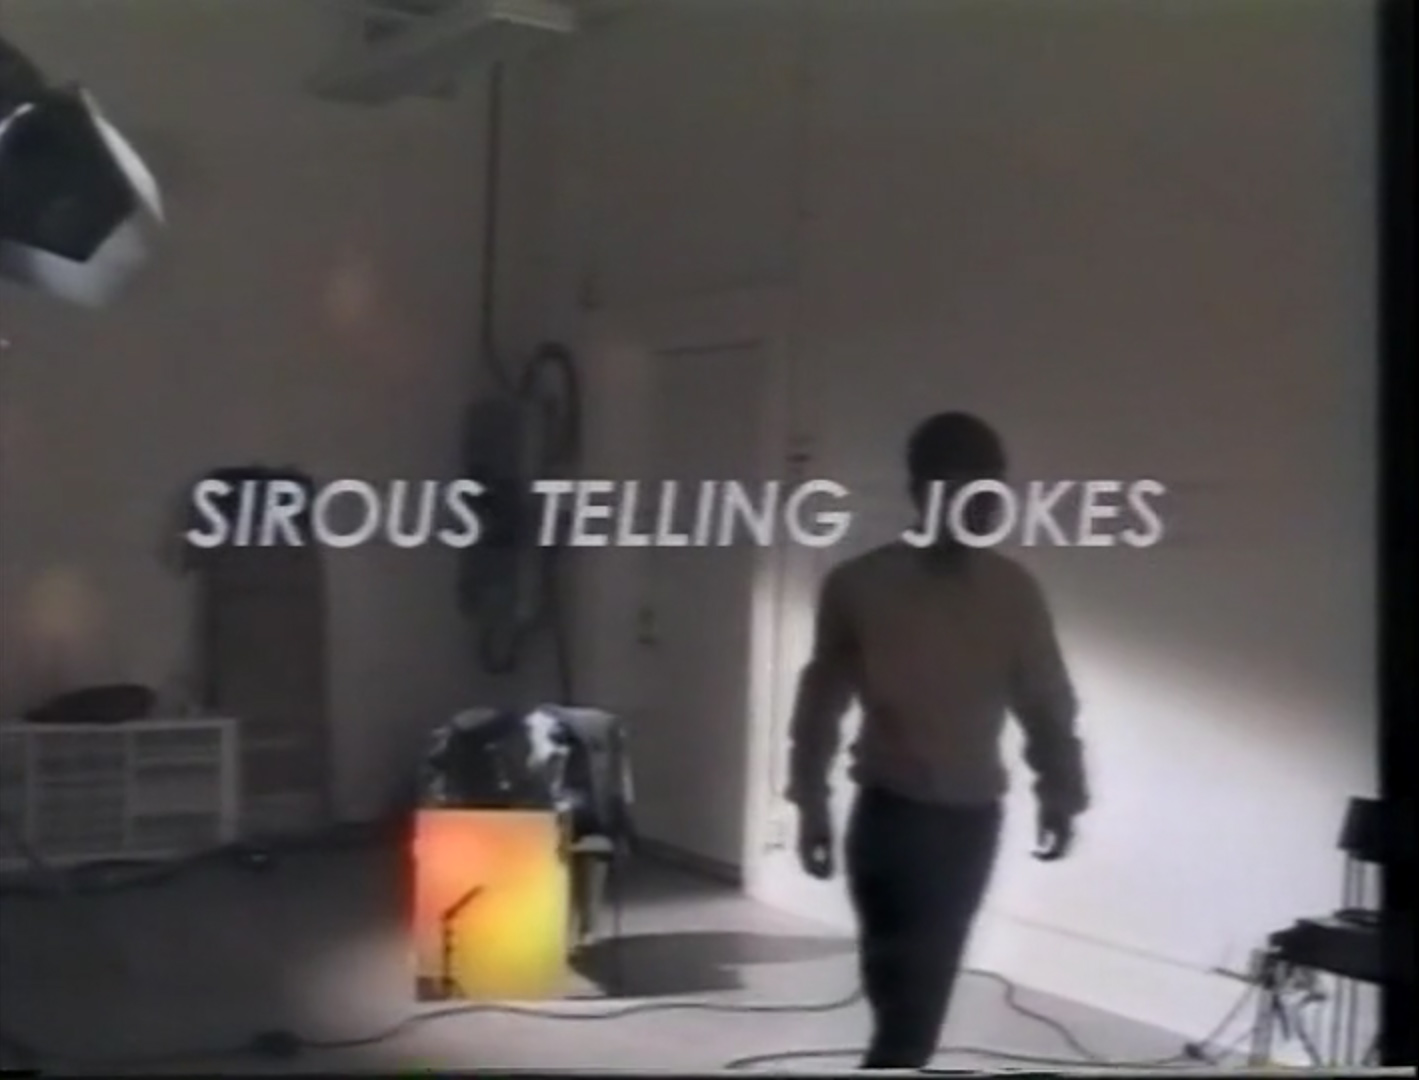 Sirous Namazi, Sirous Telling Jokes, 1996, 5:14 minutes, Video Courtesy of Galerie Nordenhake, Images Courtesy of Delgosha Gallery & the artist